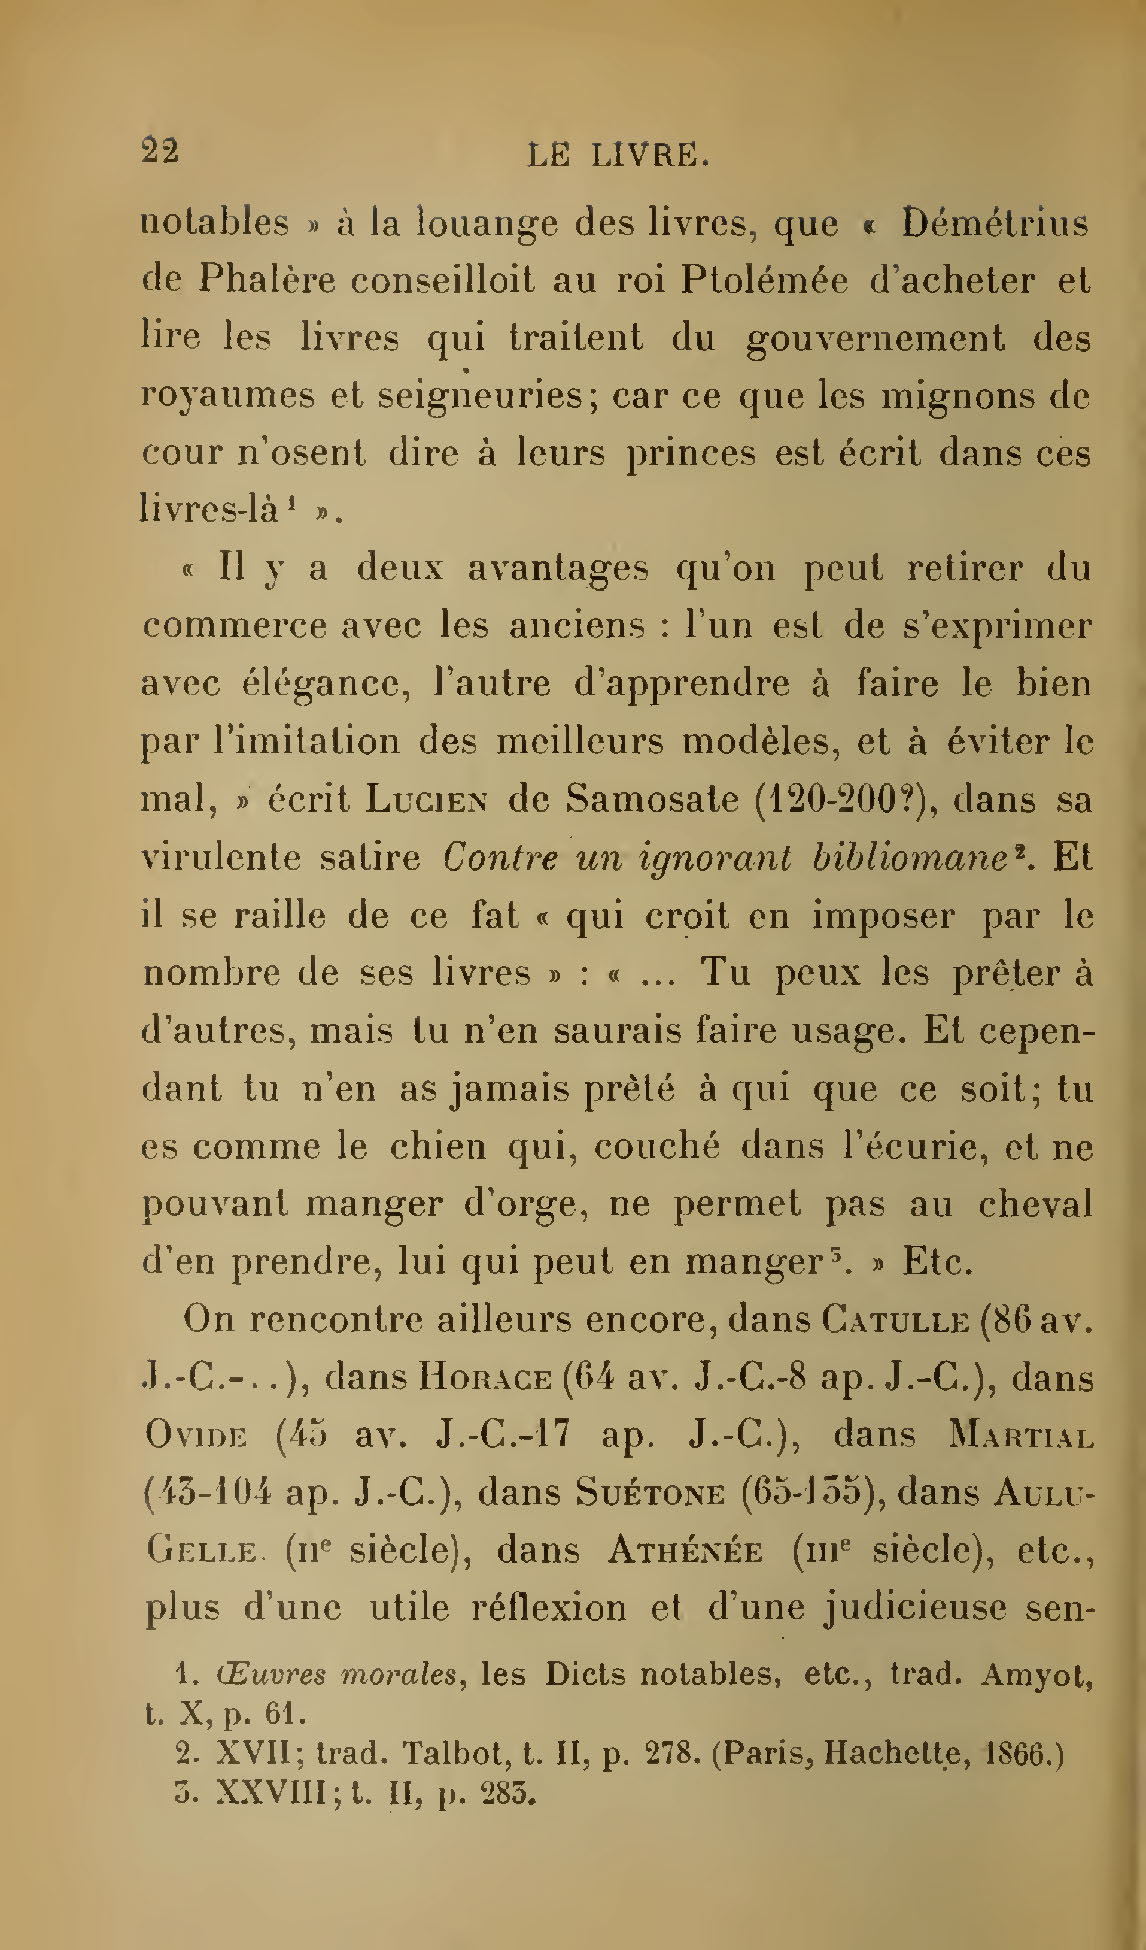 Albert Cim, Le Livre, t. I, p. 22.